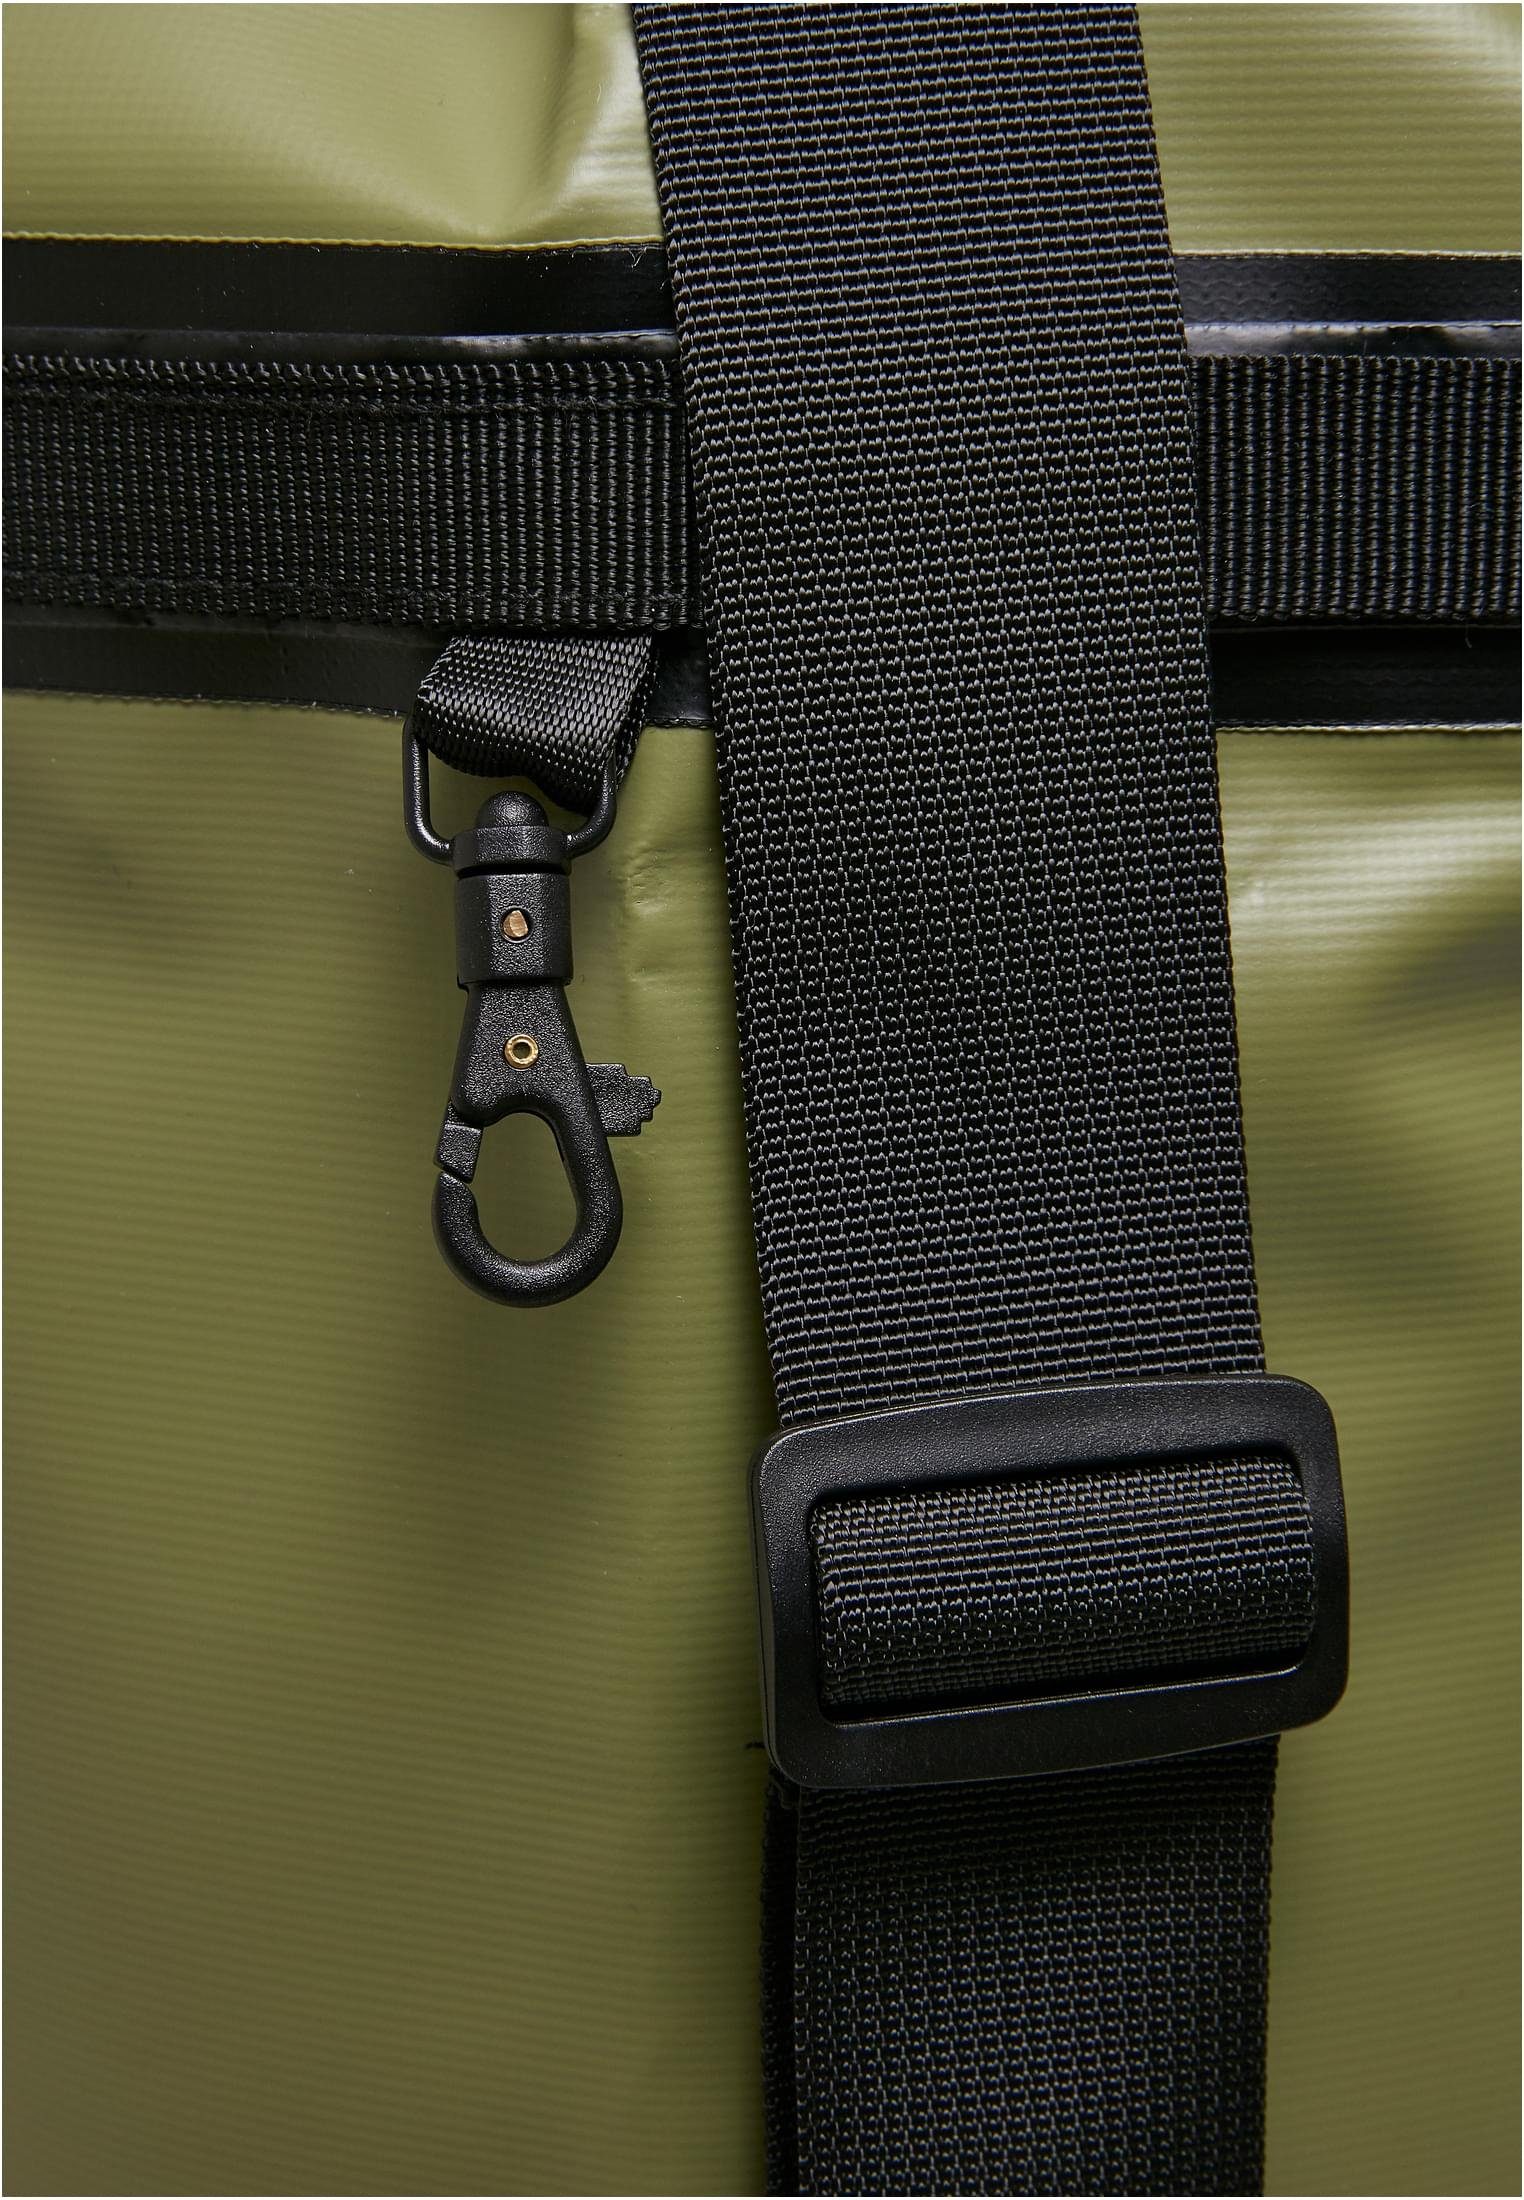 olive Unisex CLASSICS Backpack Rucksack URBAN Dry Adventure